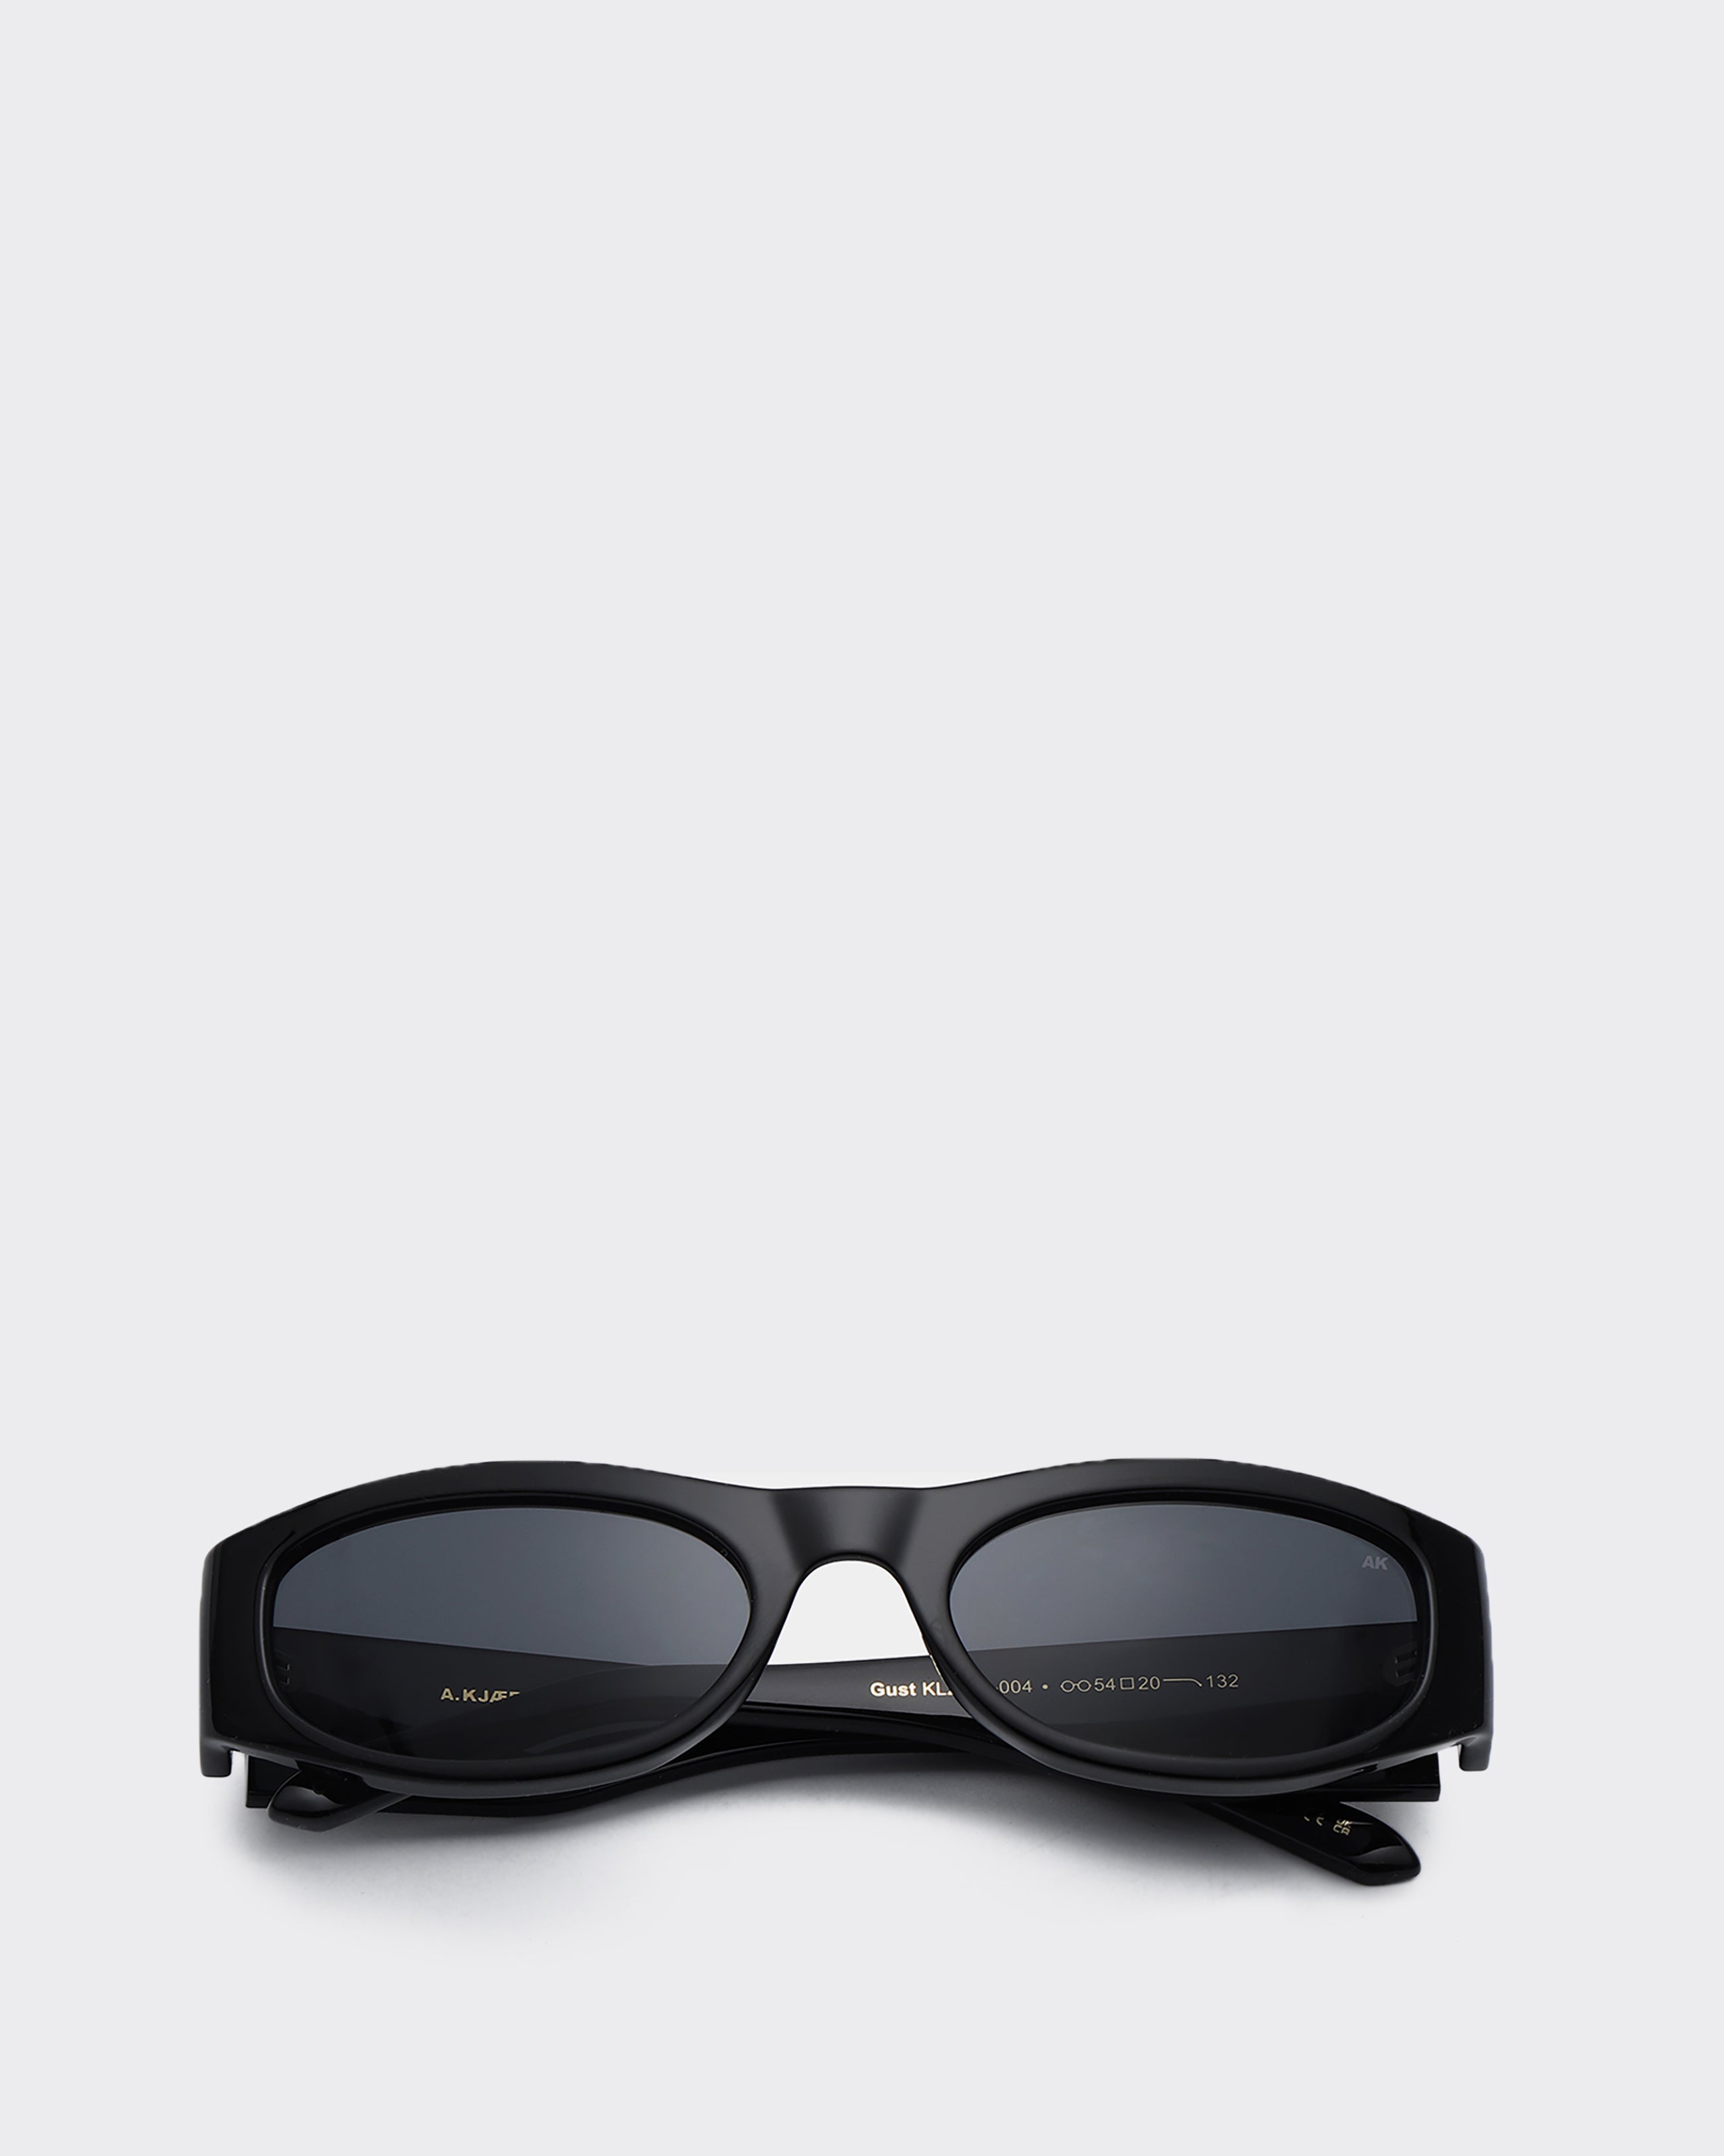 Gust Black Sunglasses